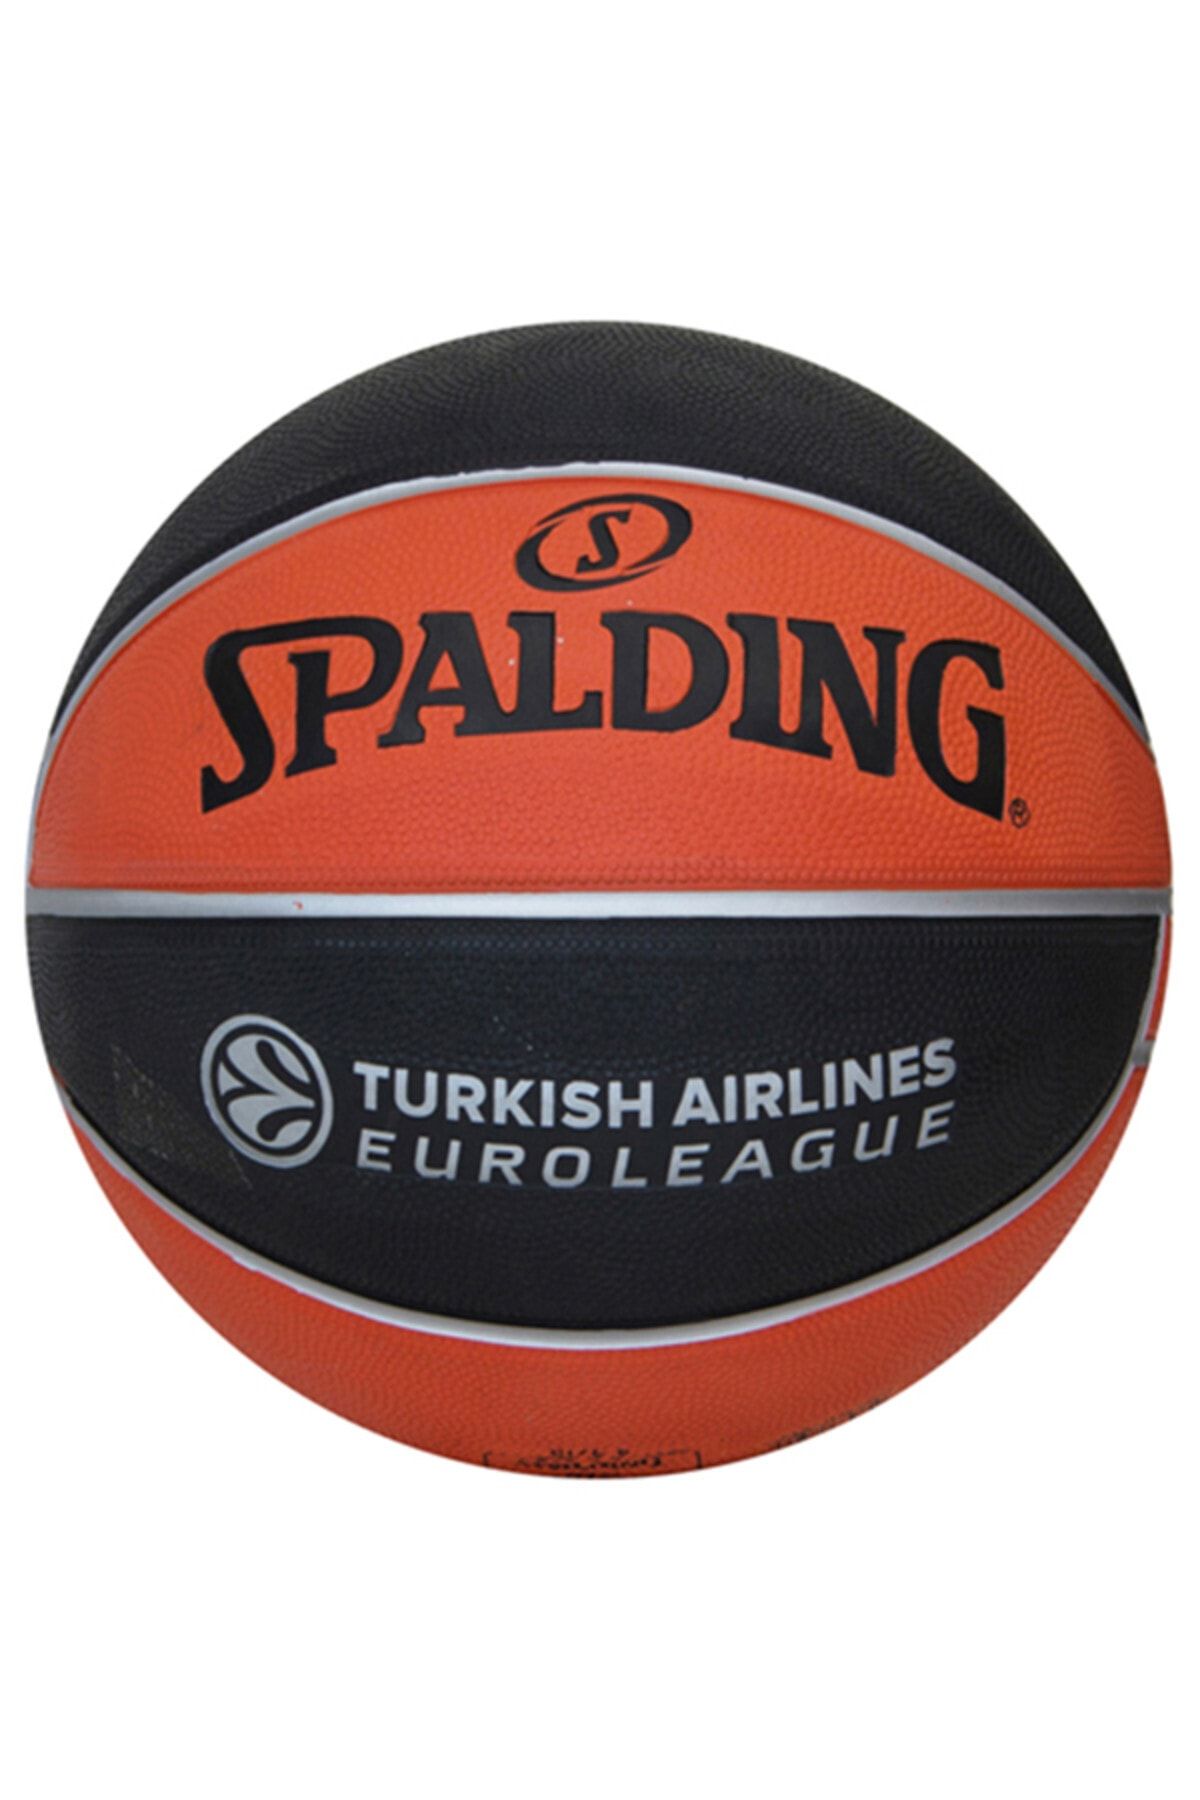 Spalding Tf-150 Euroleague Basket Topu Turkish Airlines Euro/turk